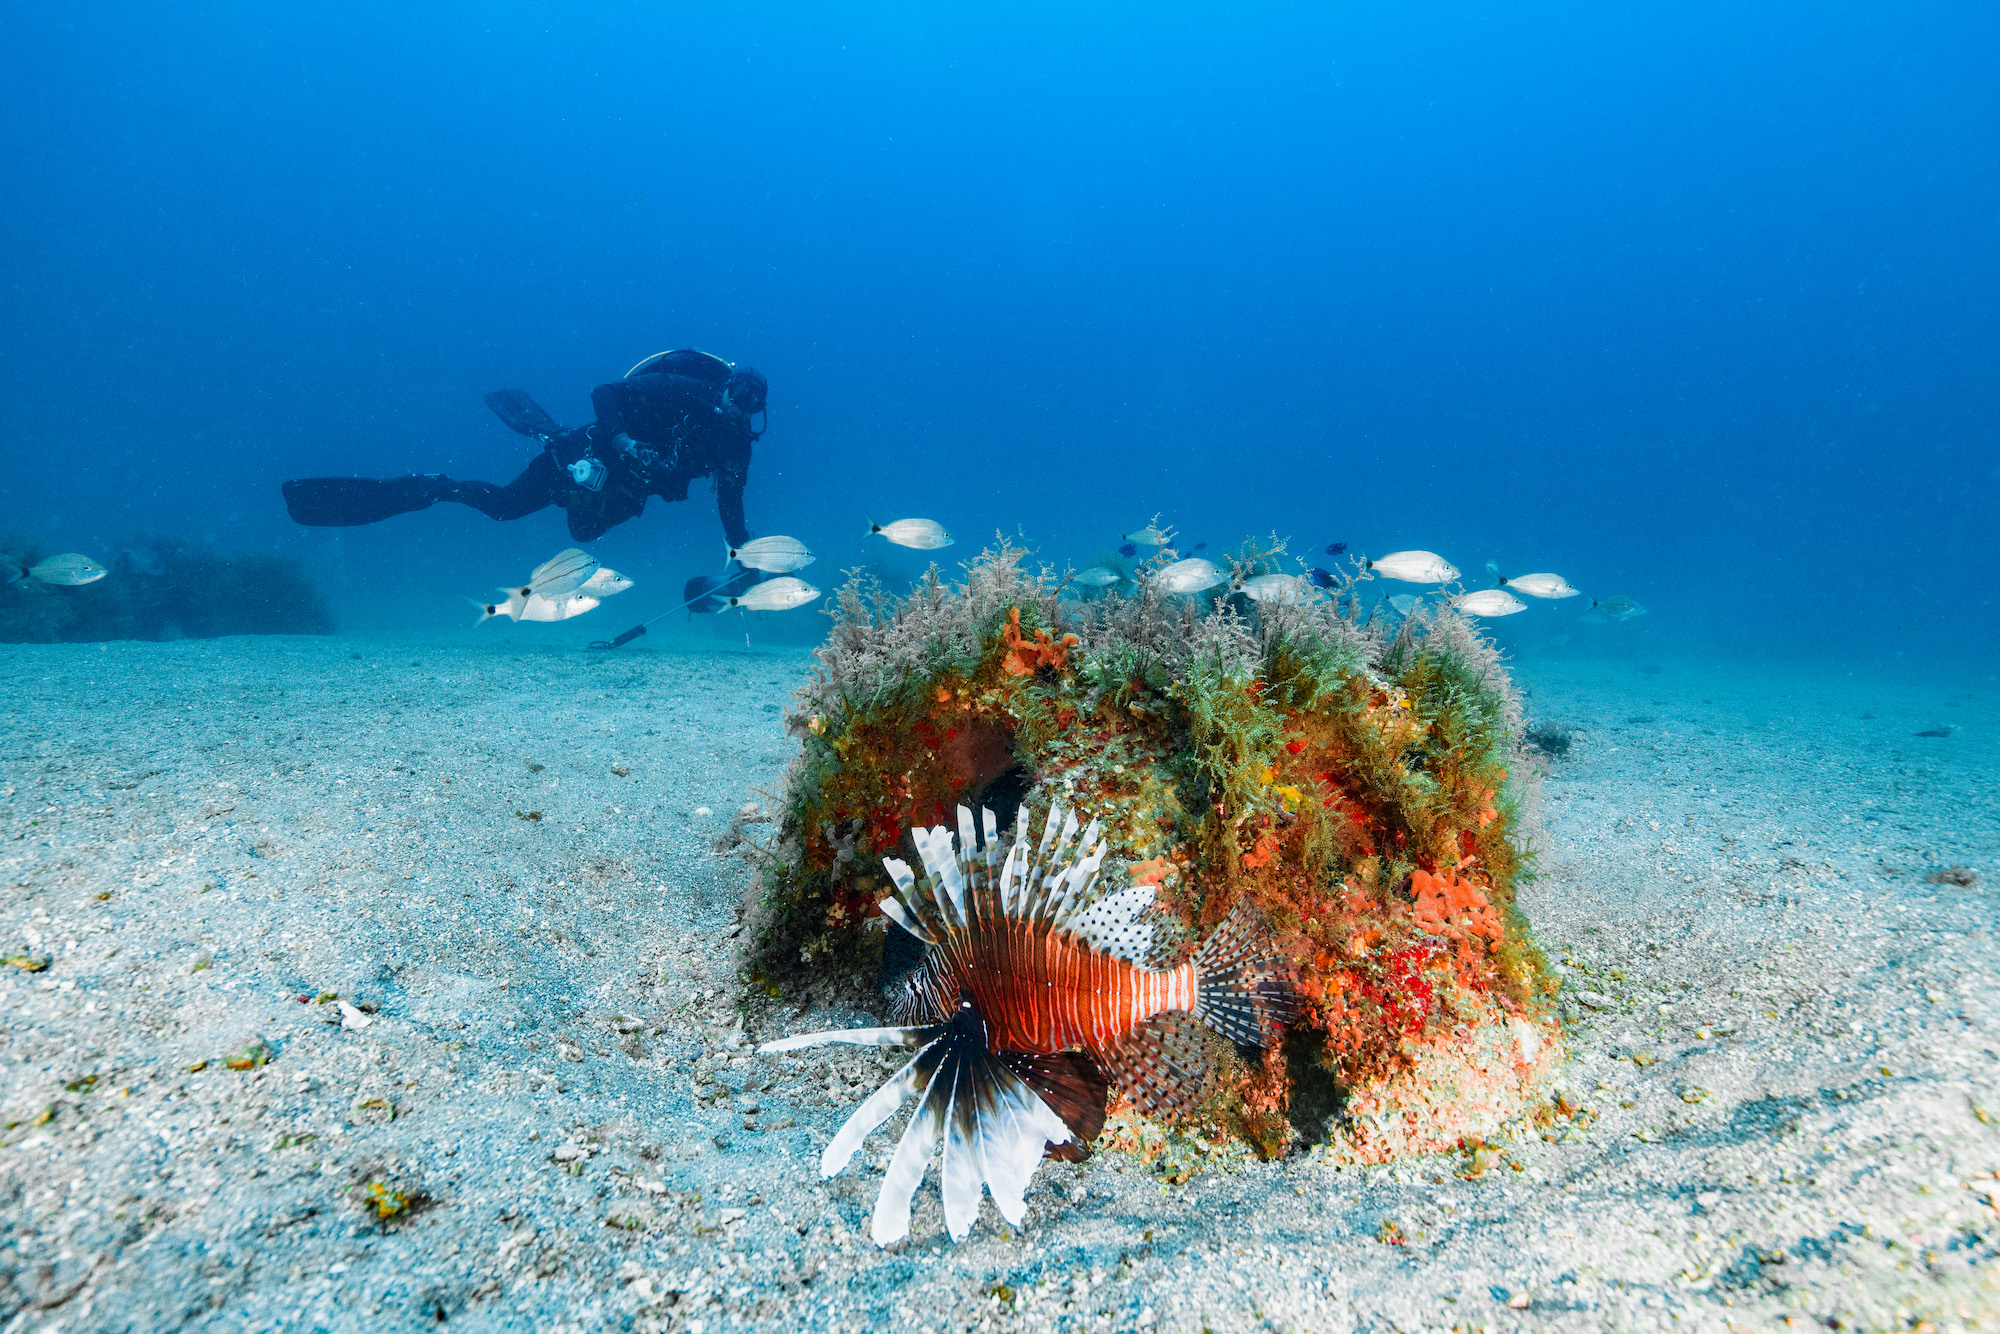 A scuba diver searches for lionfish hiding behind a rock.